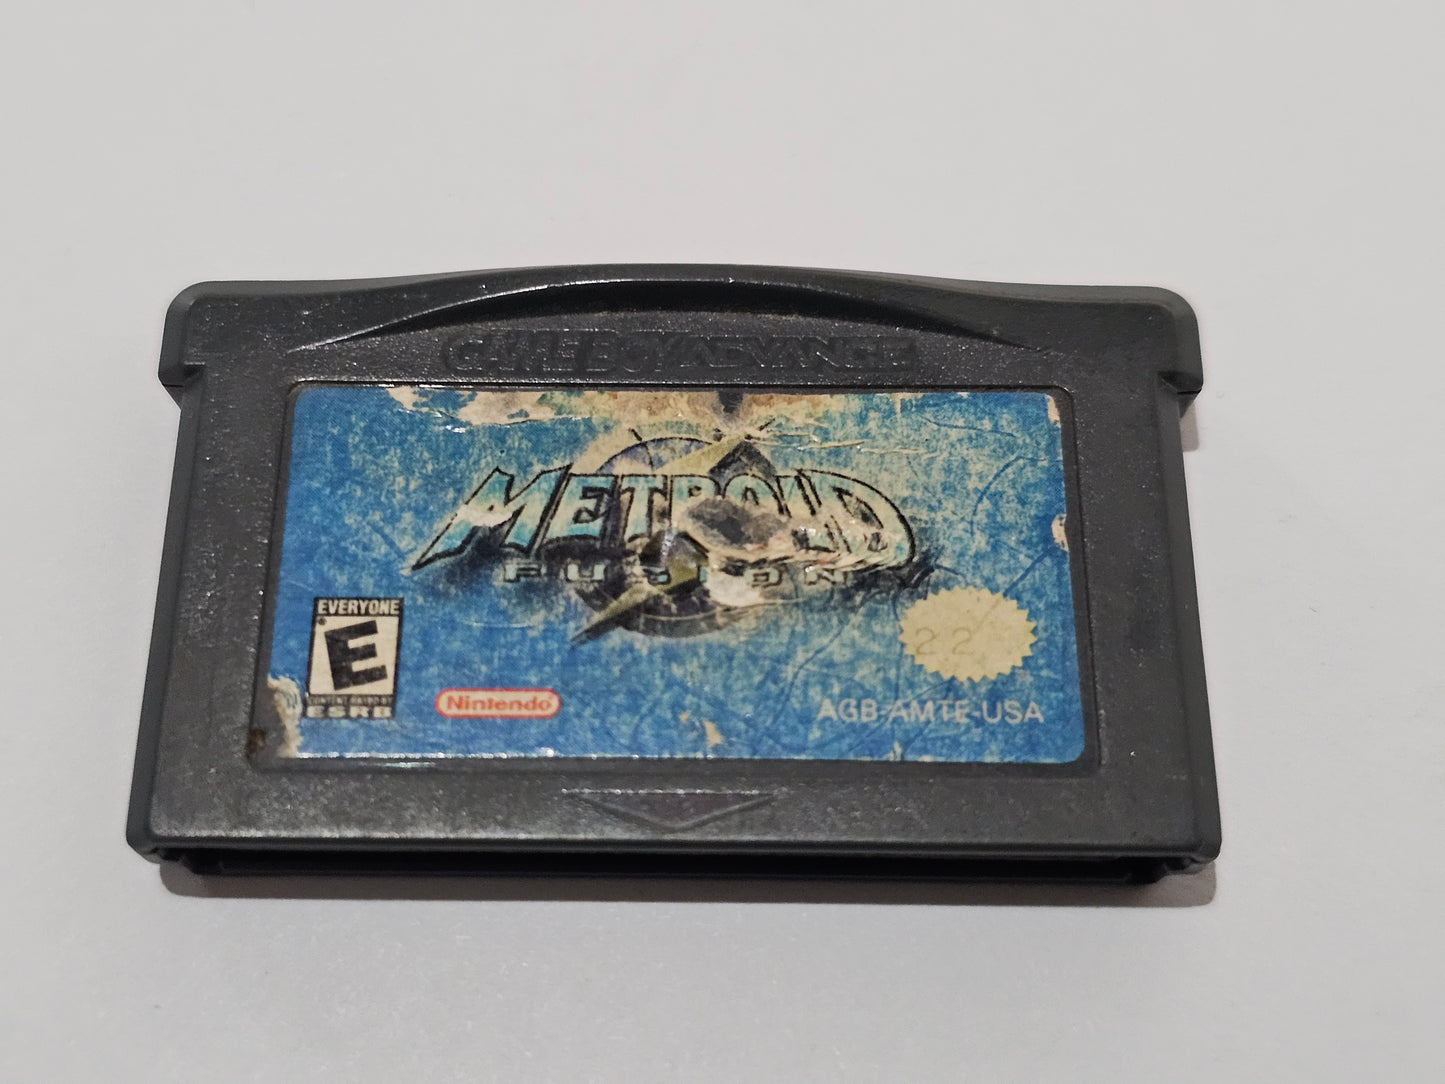 Metroid Fusion Solo Cartucho (Loose) Nintendo Game Boy Advance